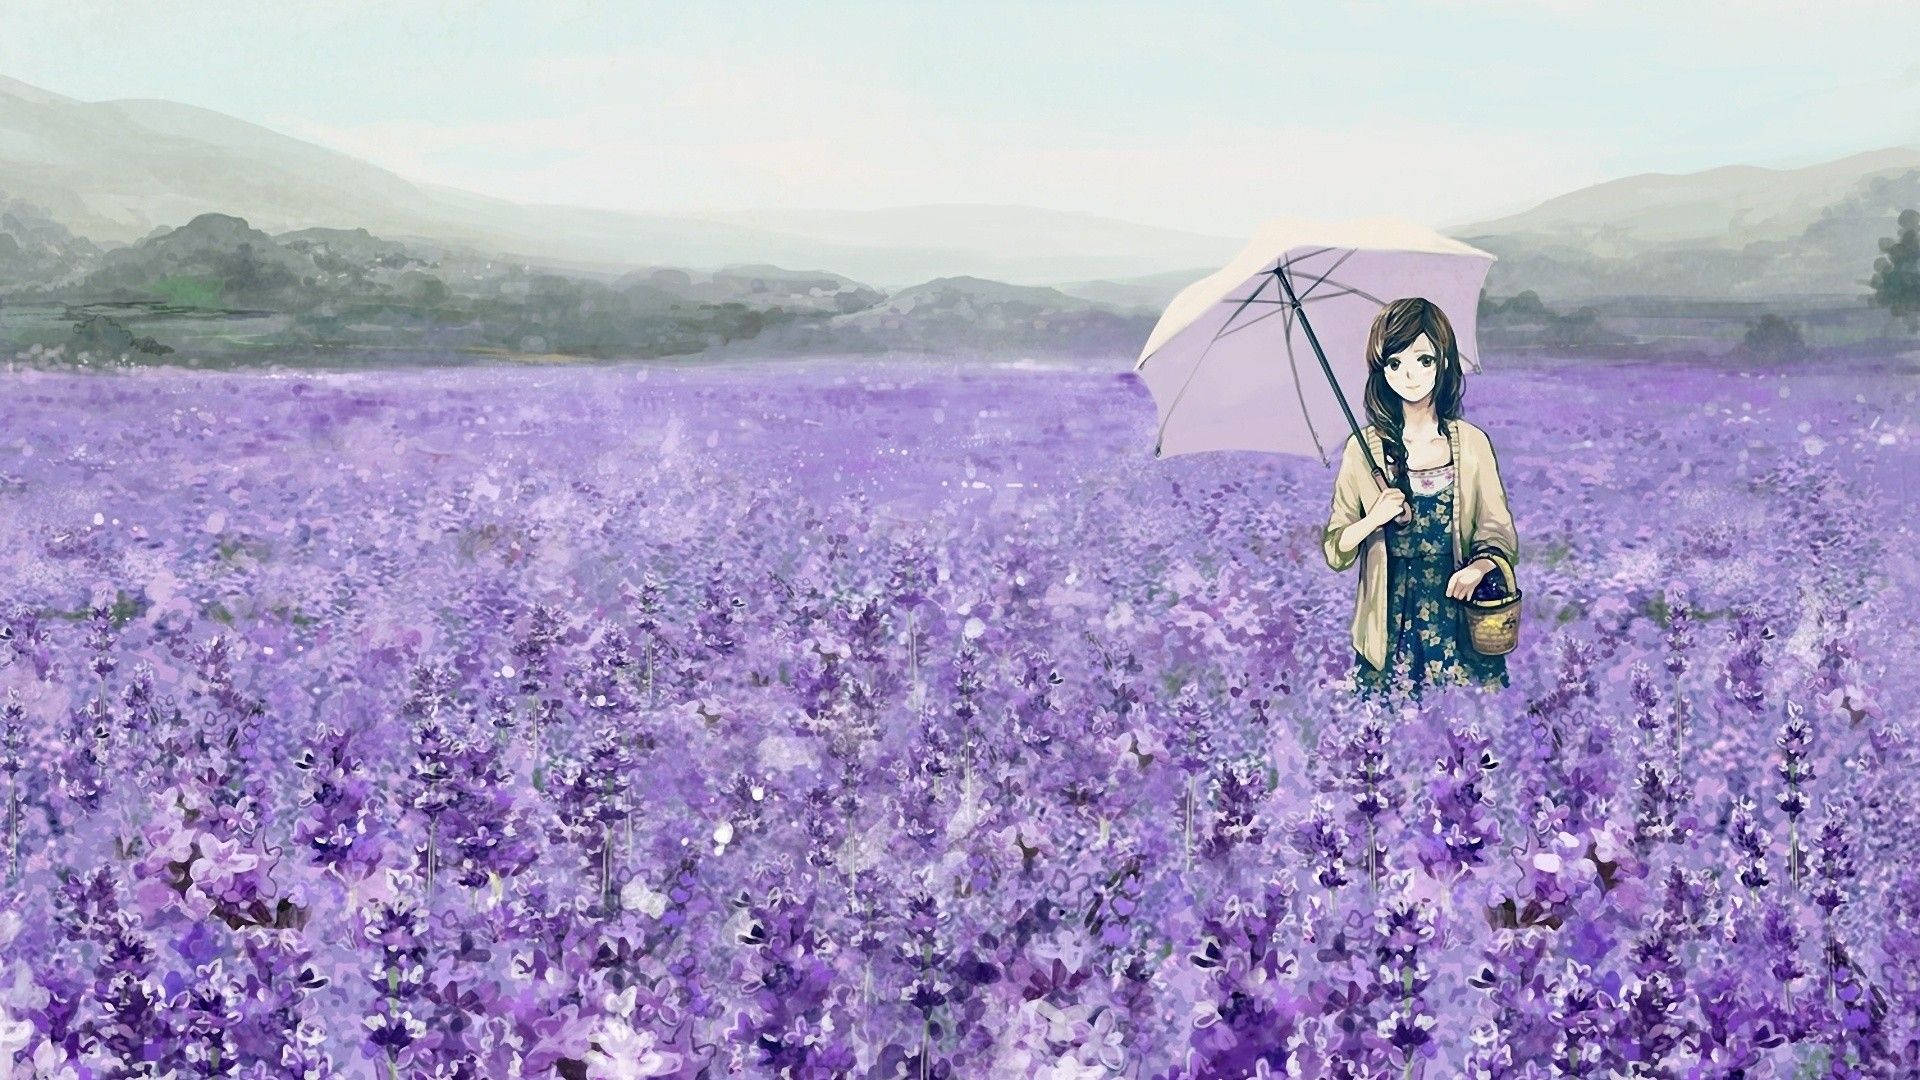 Cute Girl Purple Anime Aesthetic Background